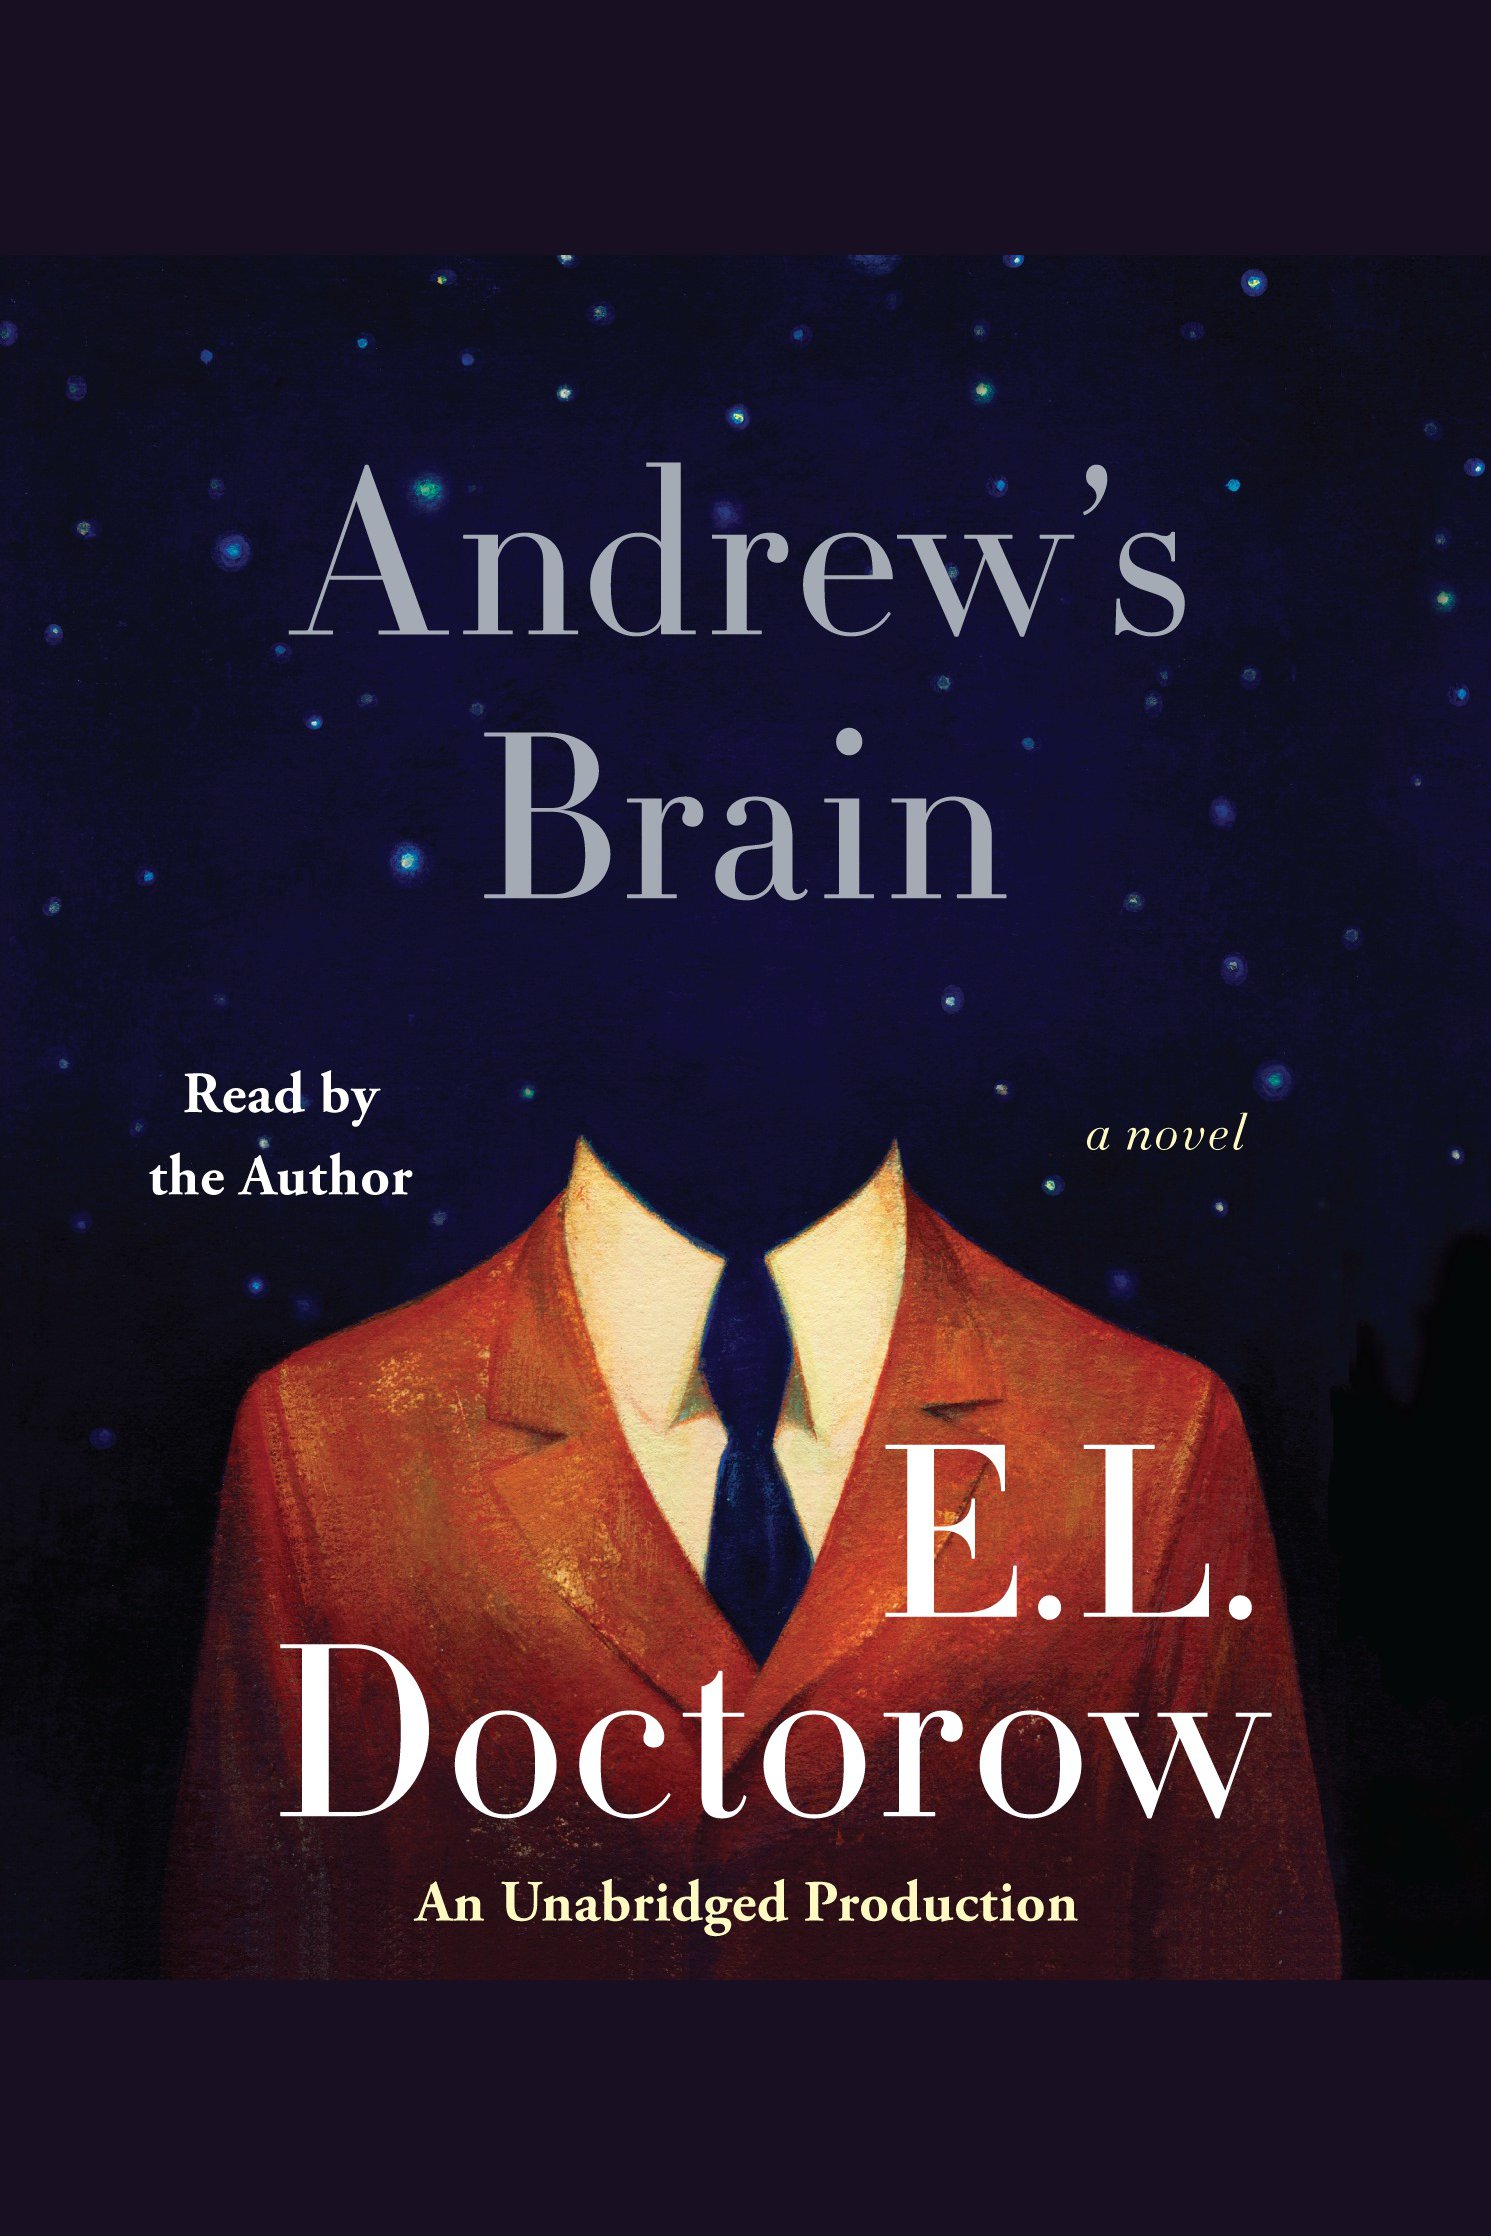 Andrew's brain cover image